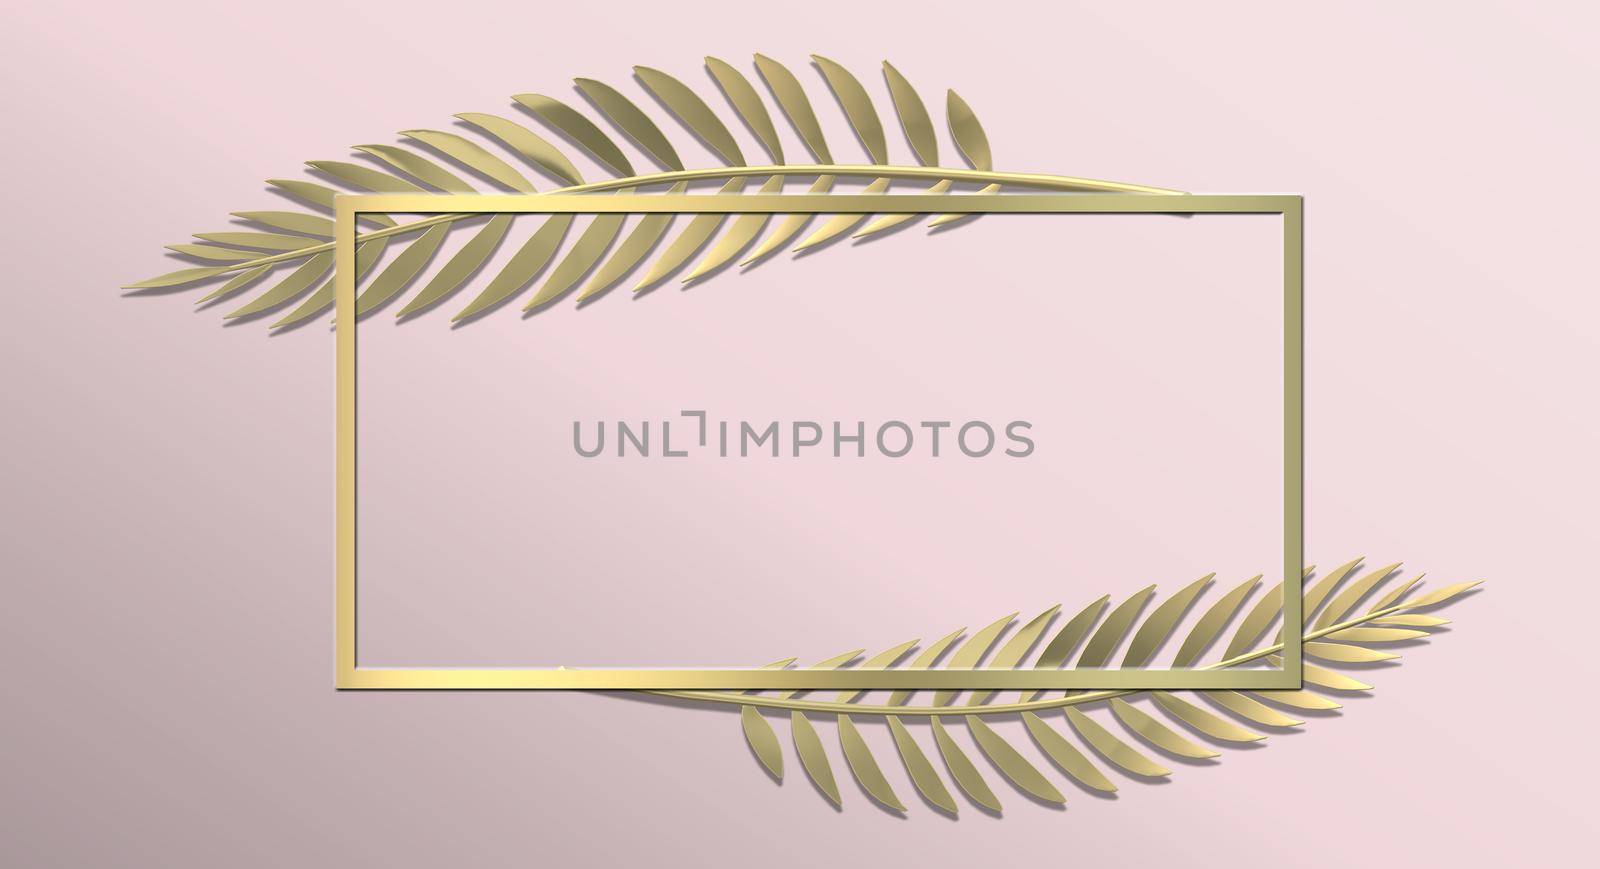 Botanical background. Abstract floral design in gold pink colour. Modern leaves design with frame for mock up. Horizontal 3D illustration